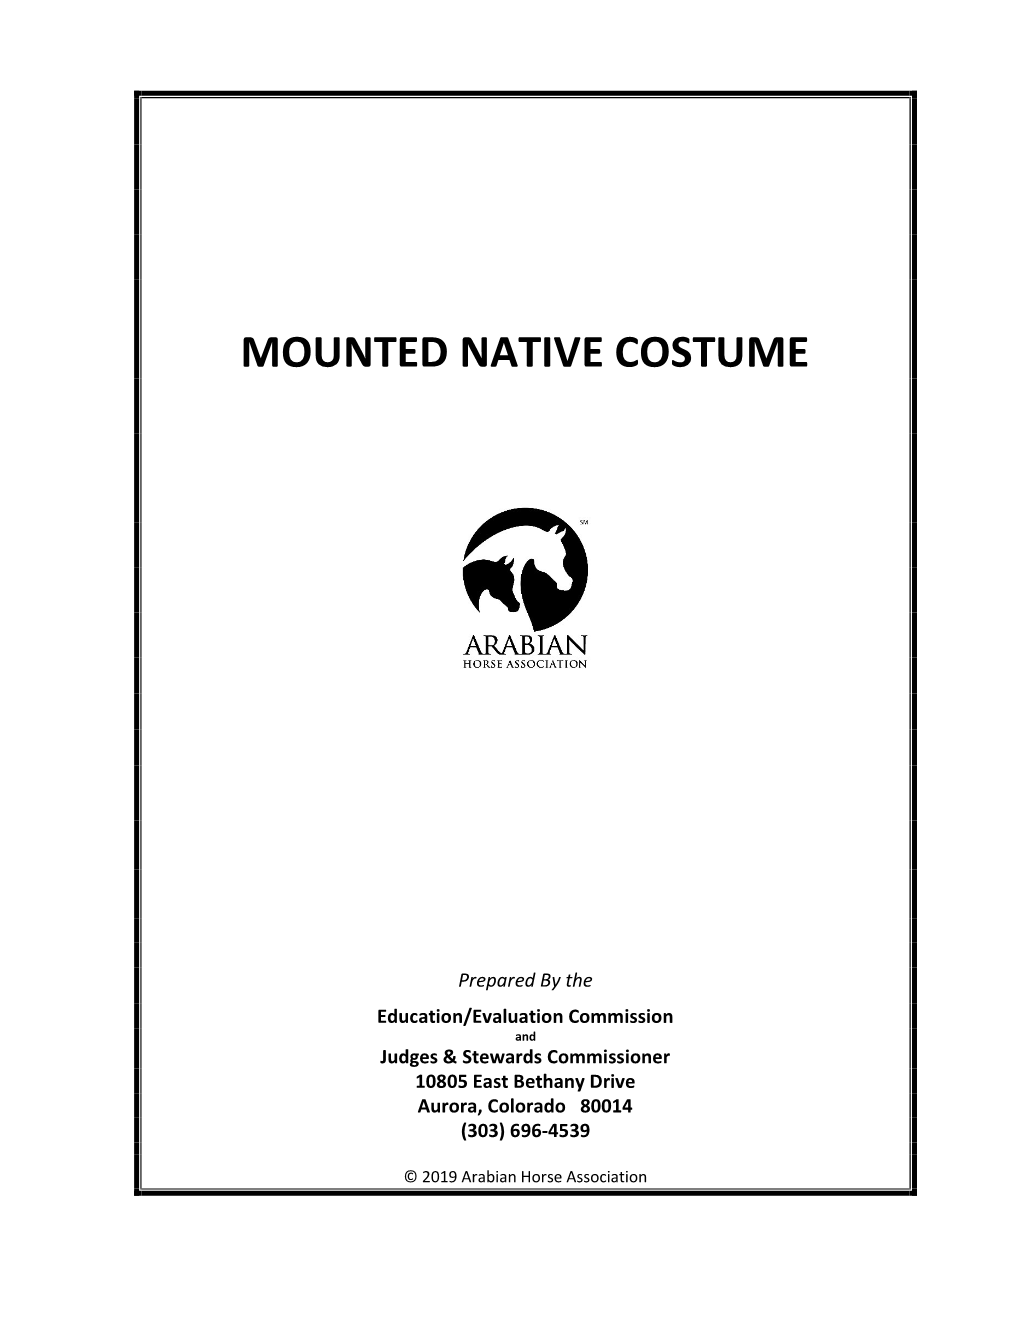 Mounted Native Costume